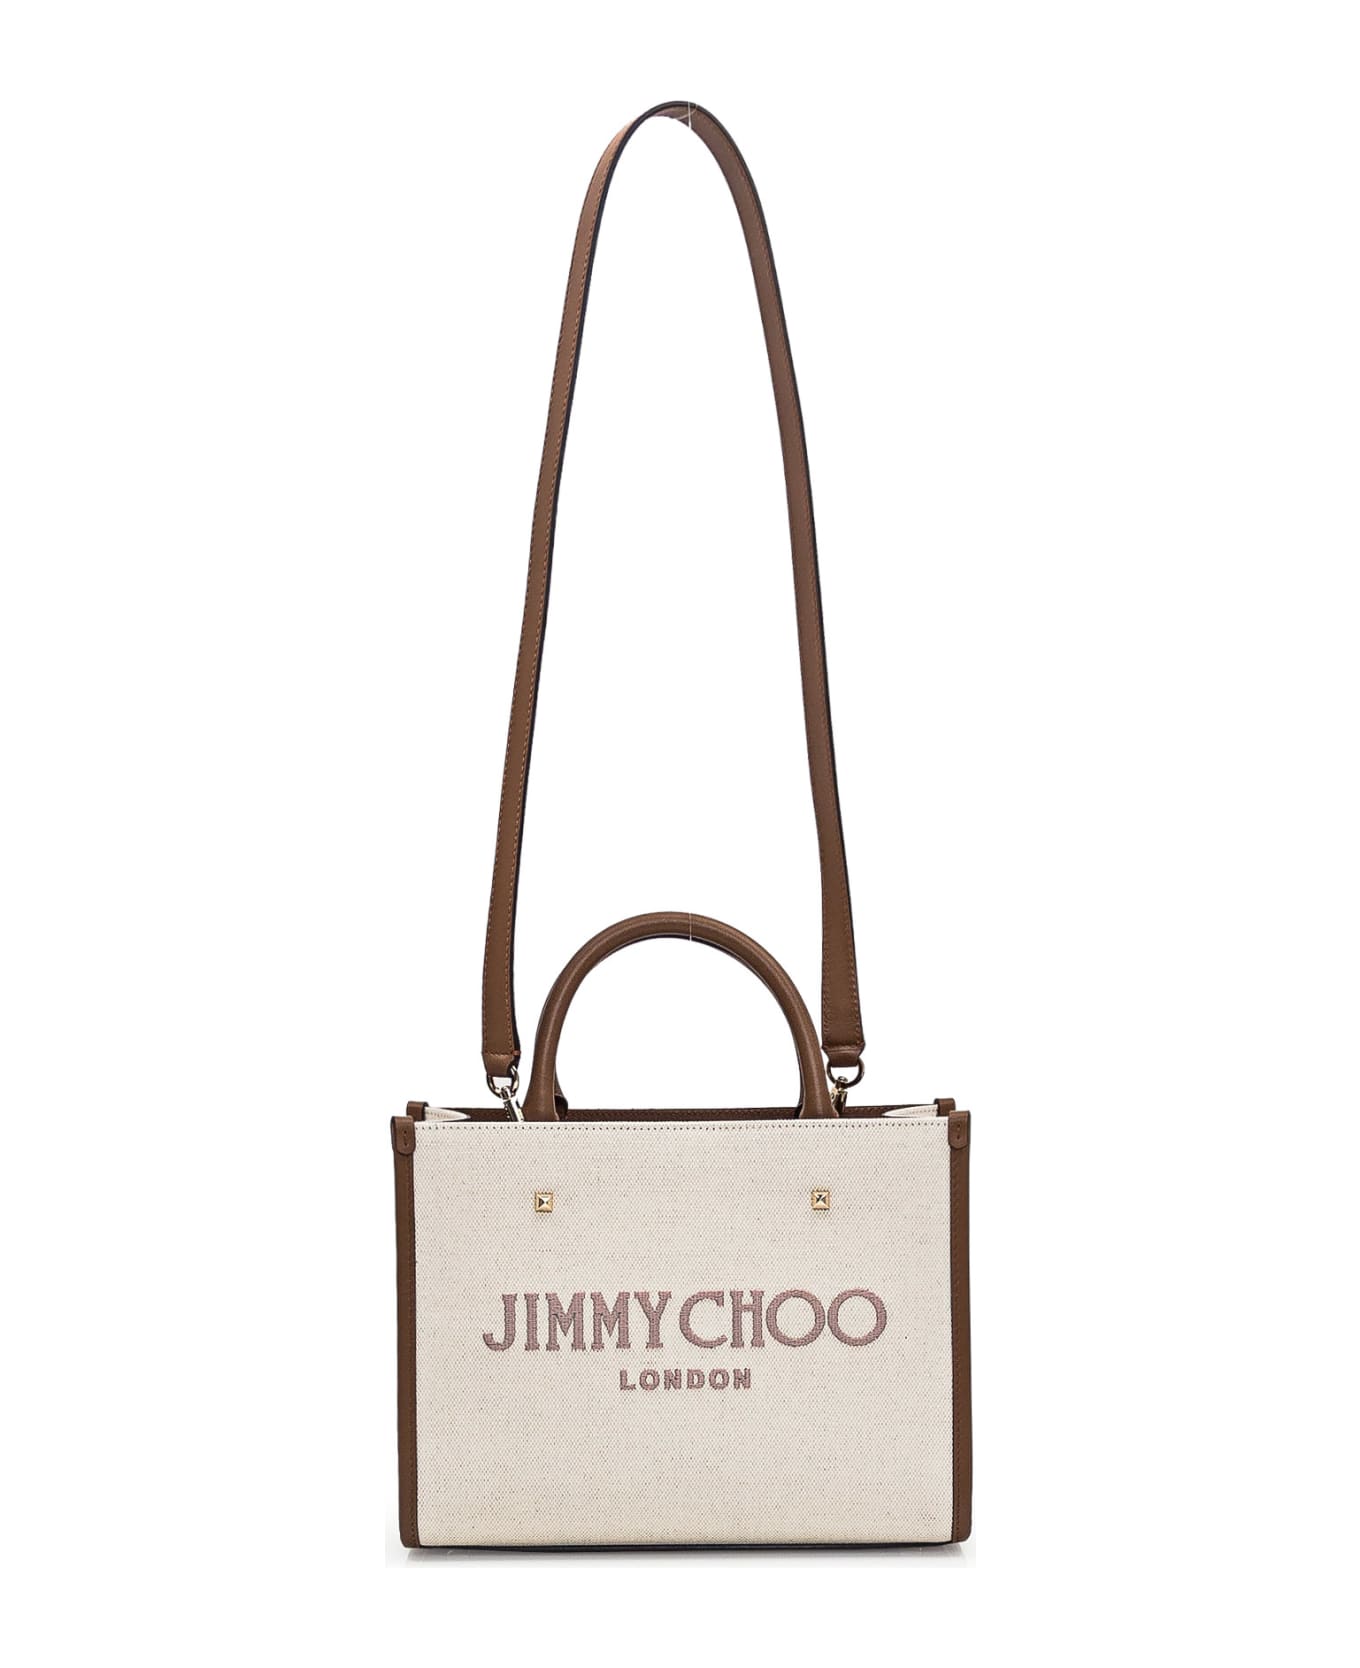 Jimmy Choo Avenue S Tote Bag - NATURAL/TAUPE/DARK TAN/LIGHT GOLD